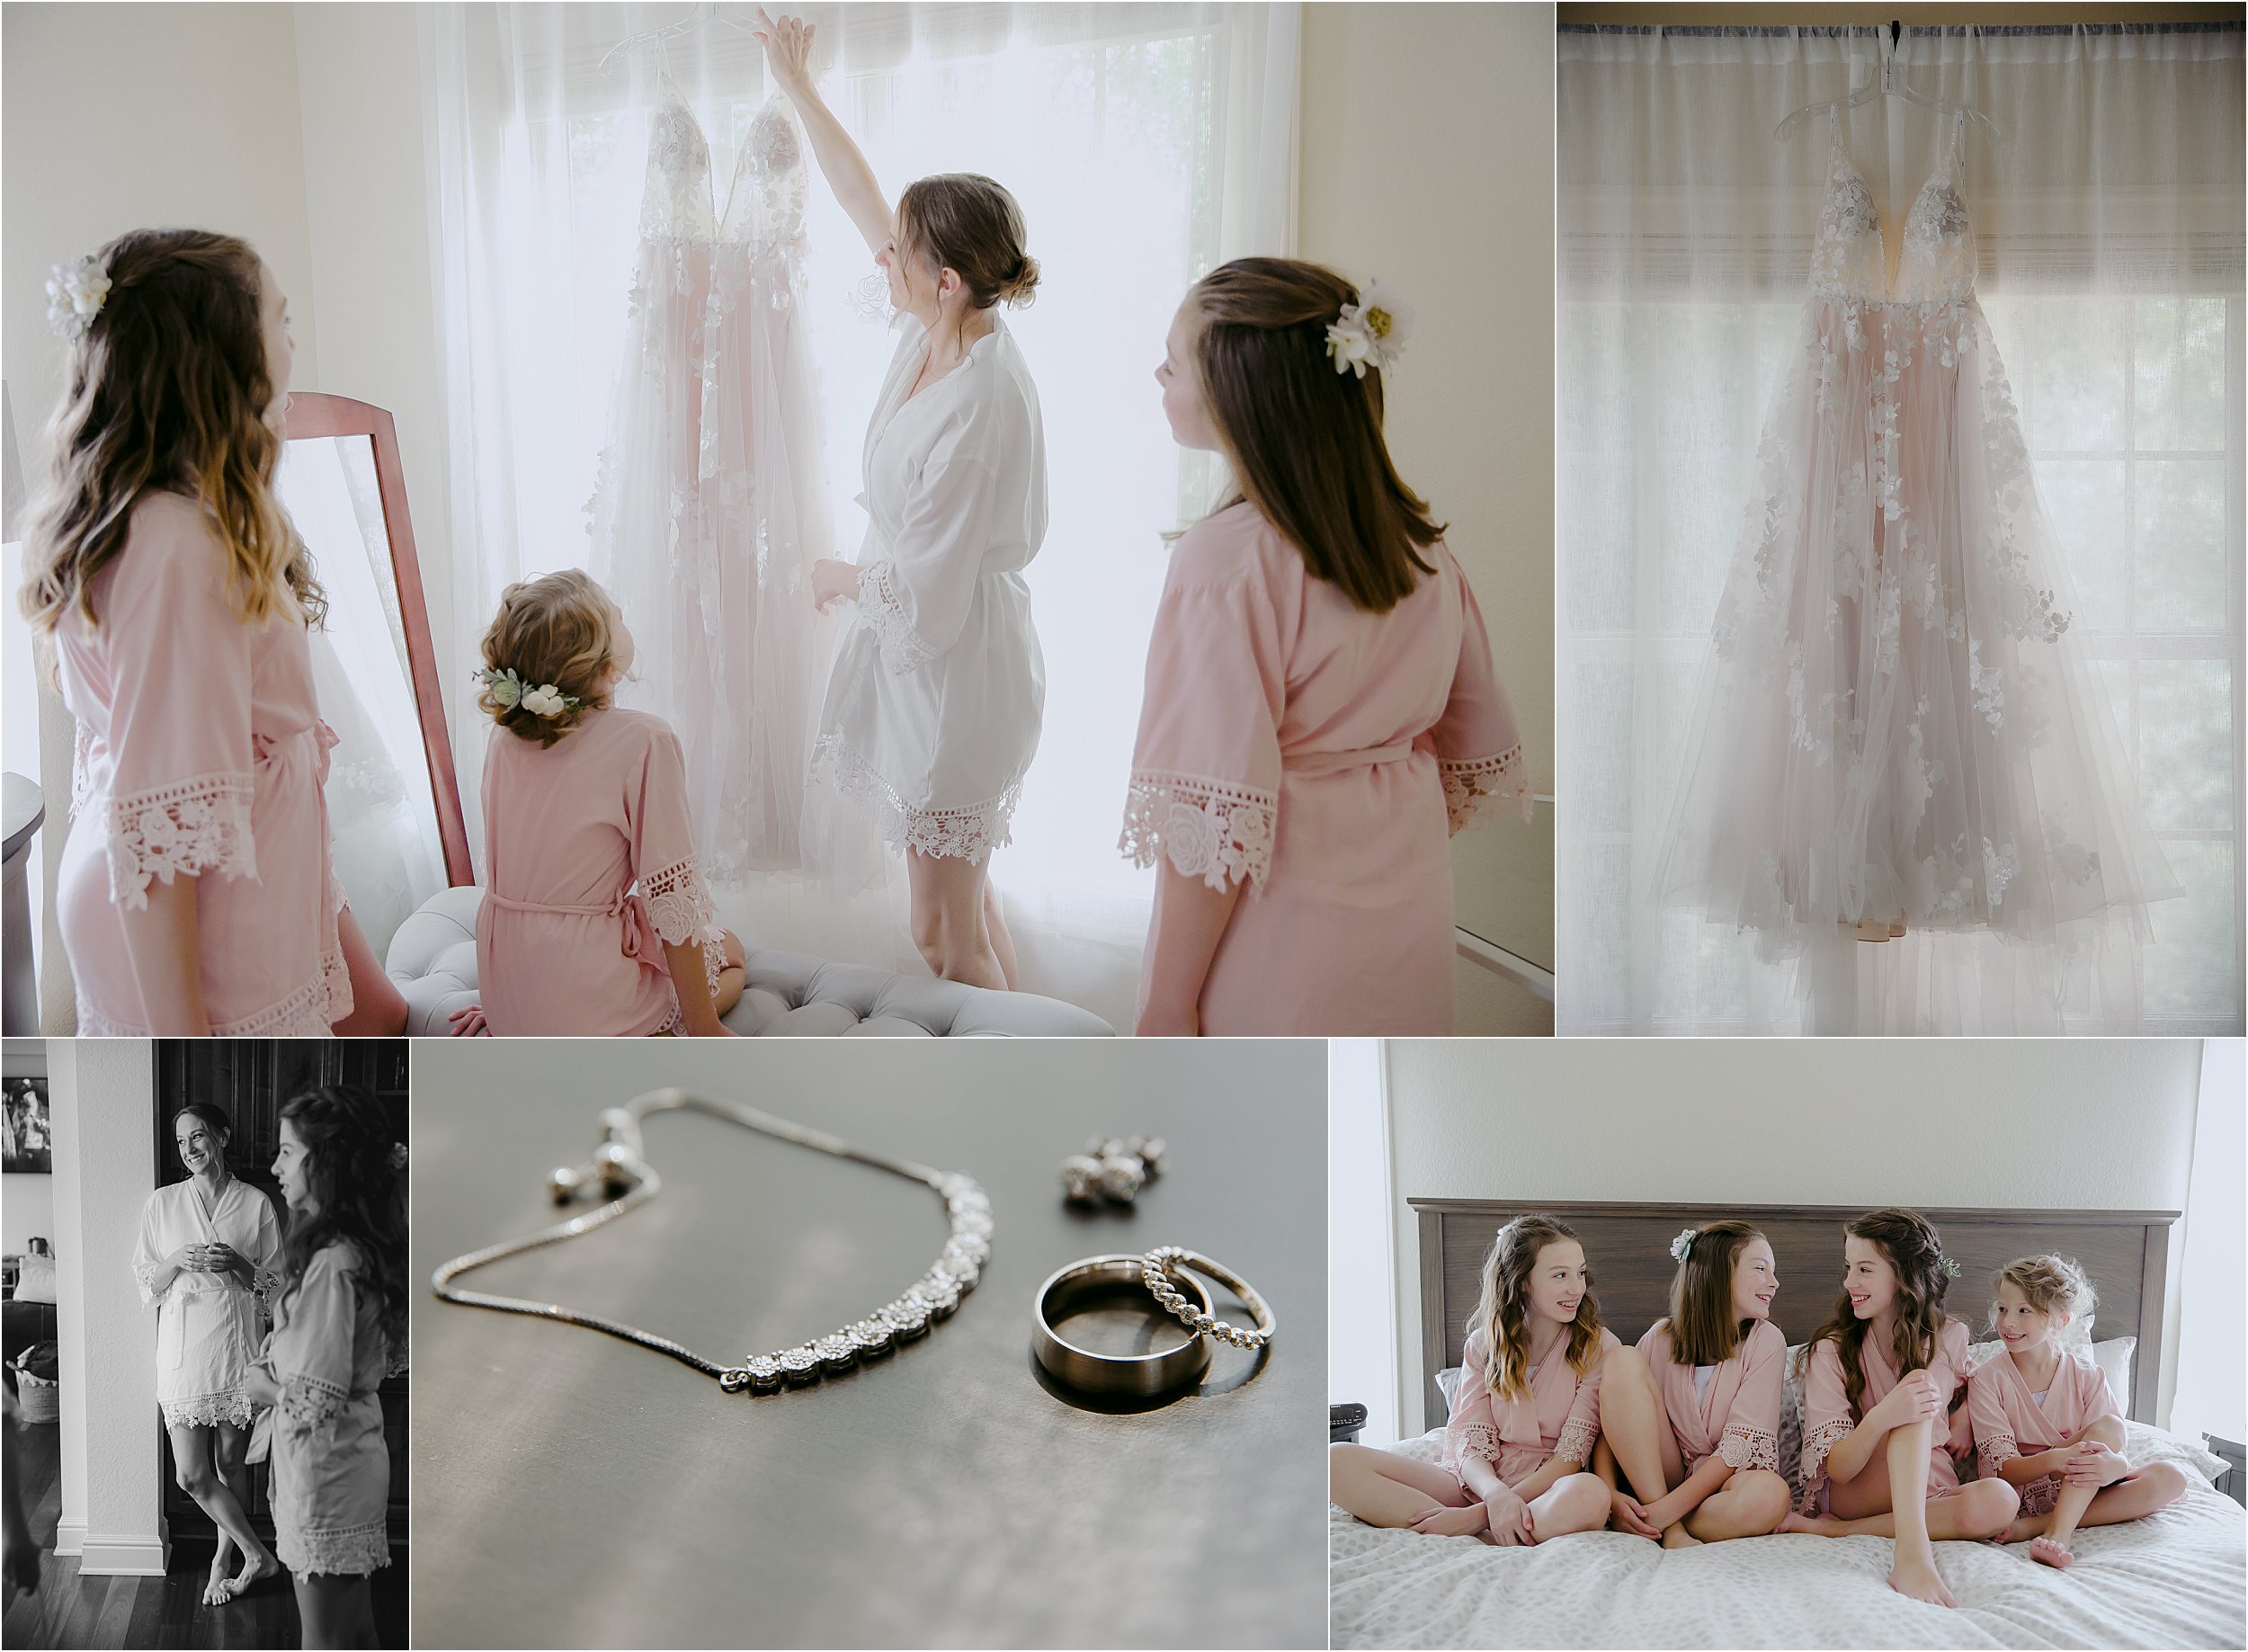 01-bride-white-robe-holding-wedding-dress-daughters-pink-robes-watching.JPG